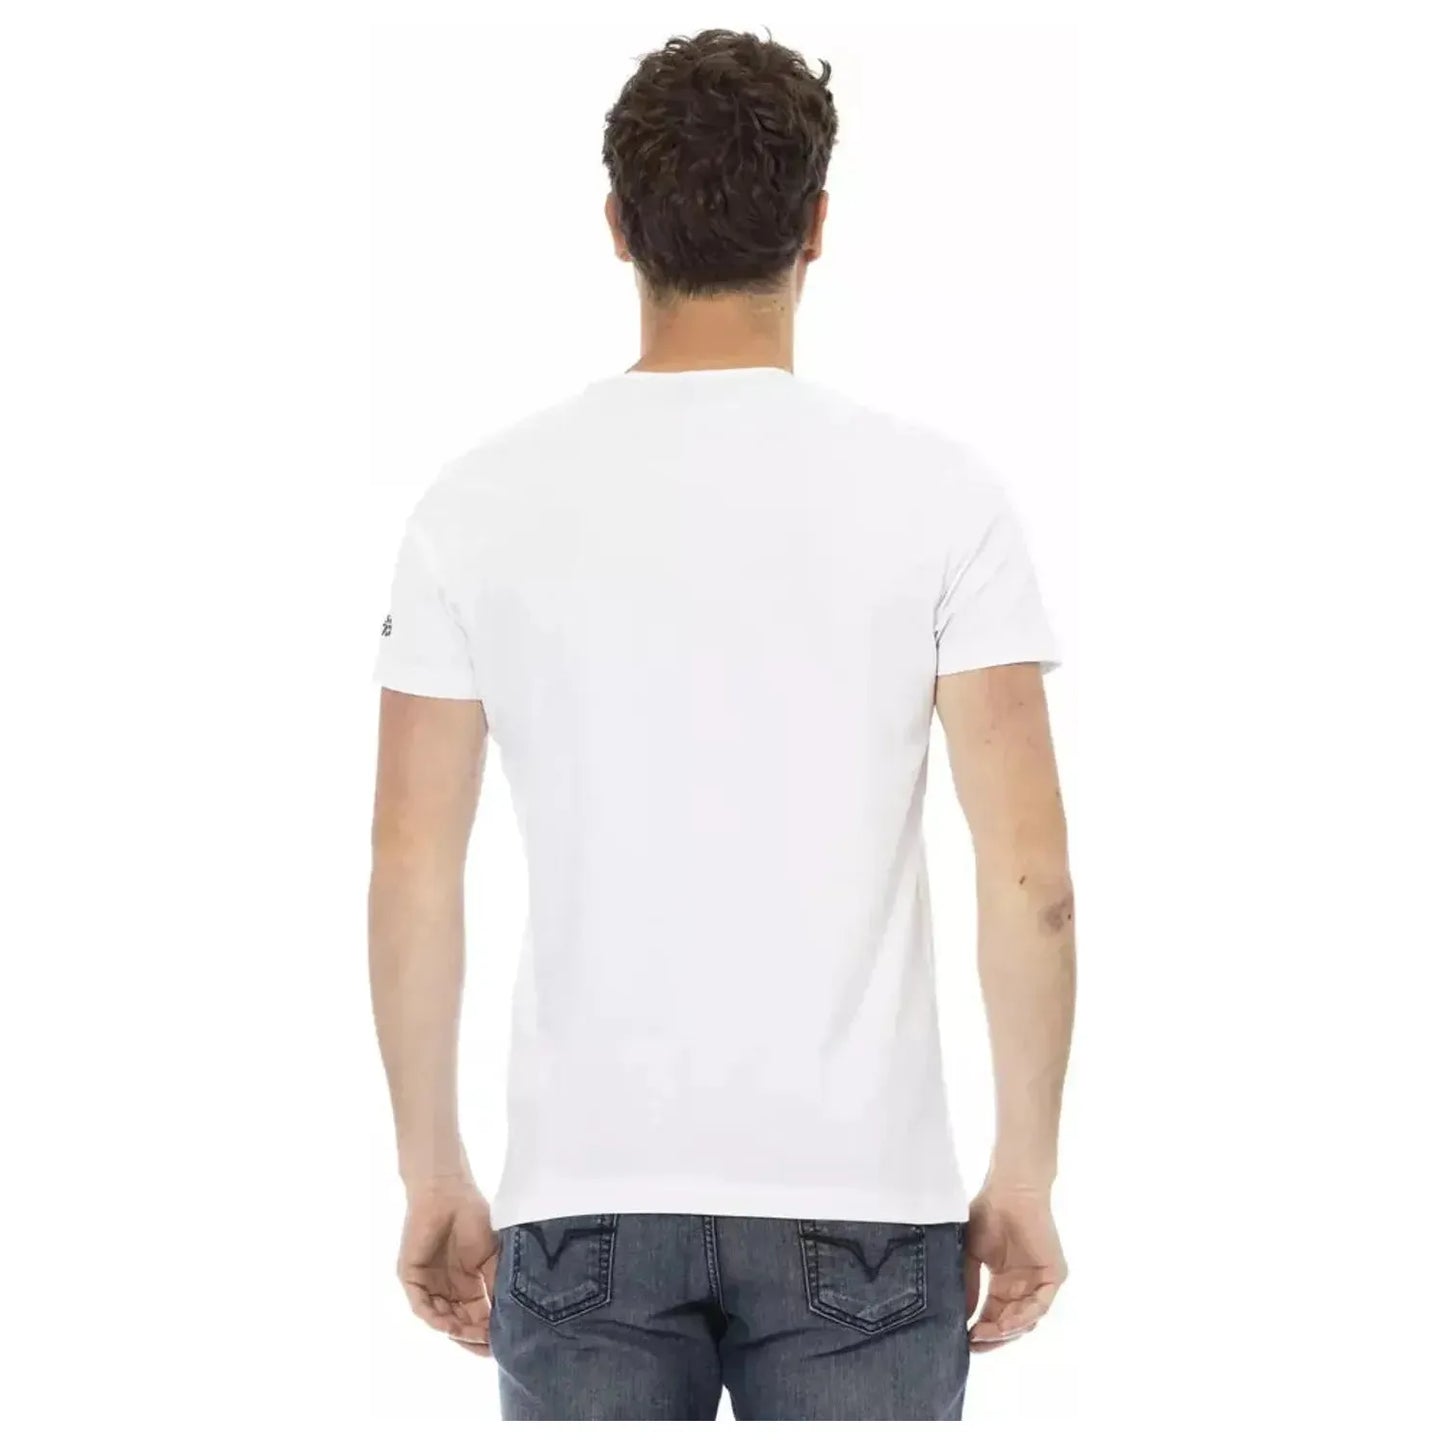 Trussardi Action Elegant White Tee with Graphic Charm white-cotton-t-shirt-124